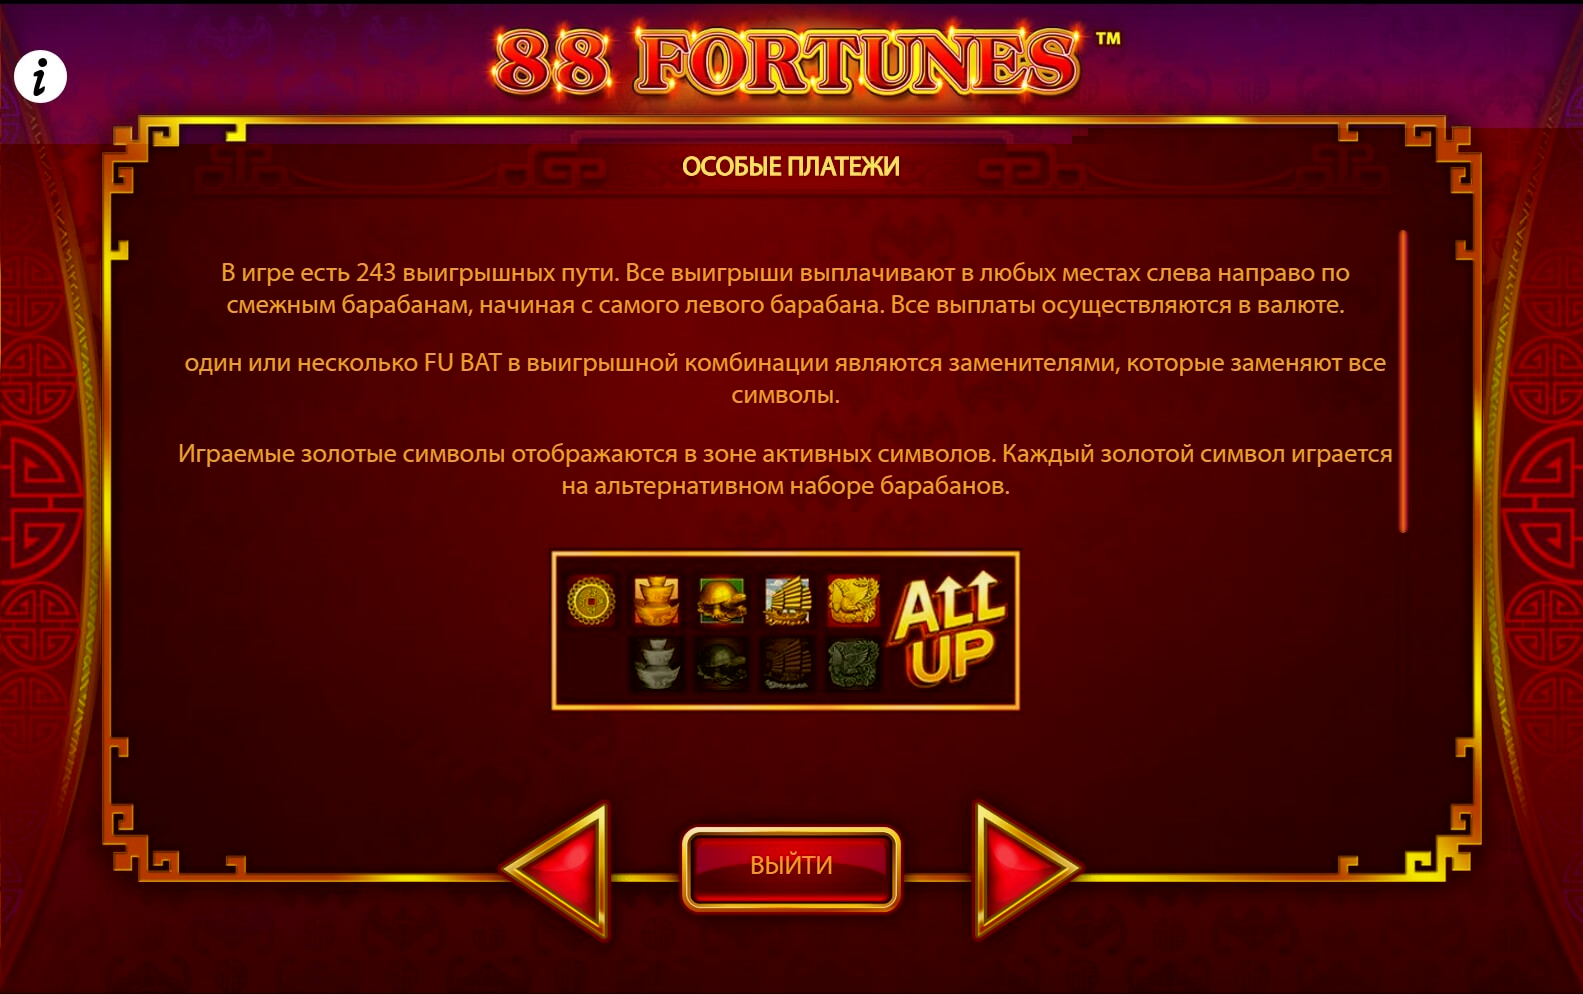 88 fortunes slot machine detail image 3